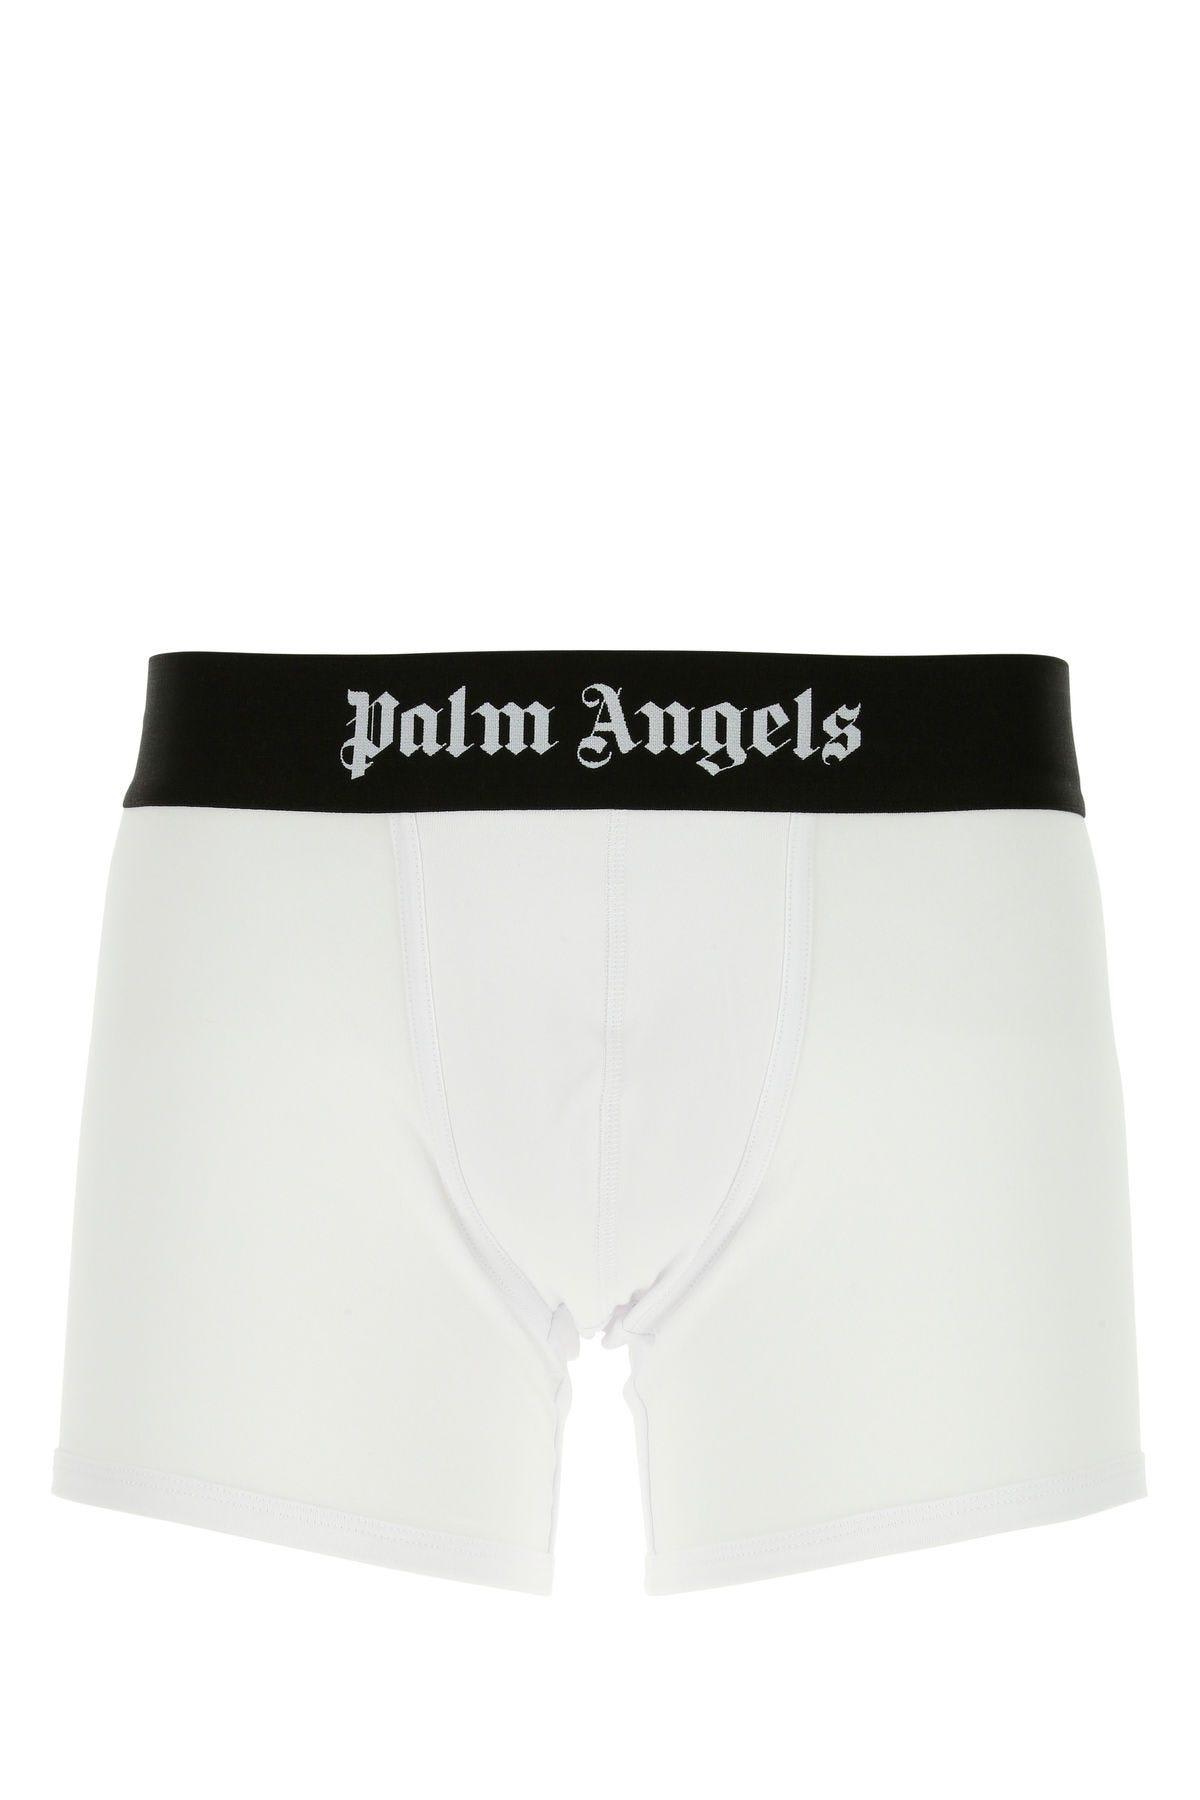 Palm Angels White Stretch Cotton Boxer Set